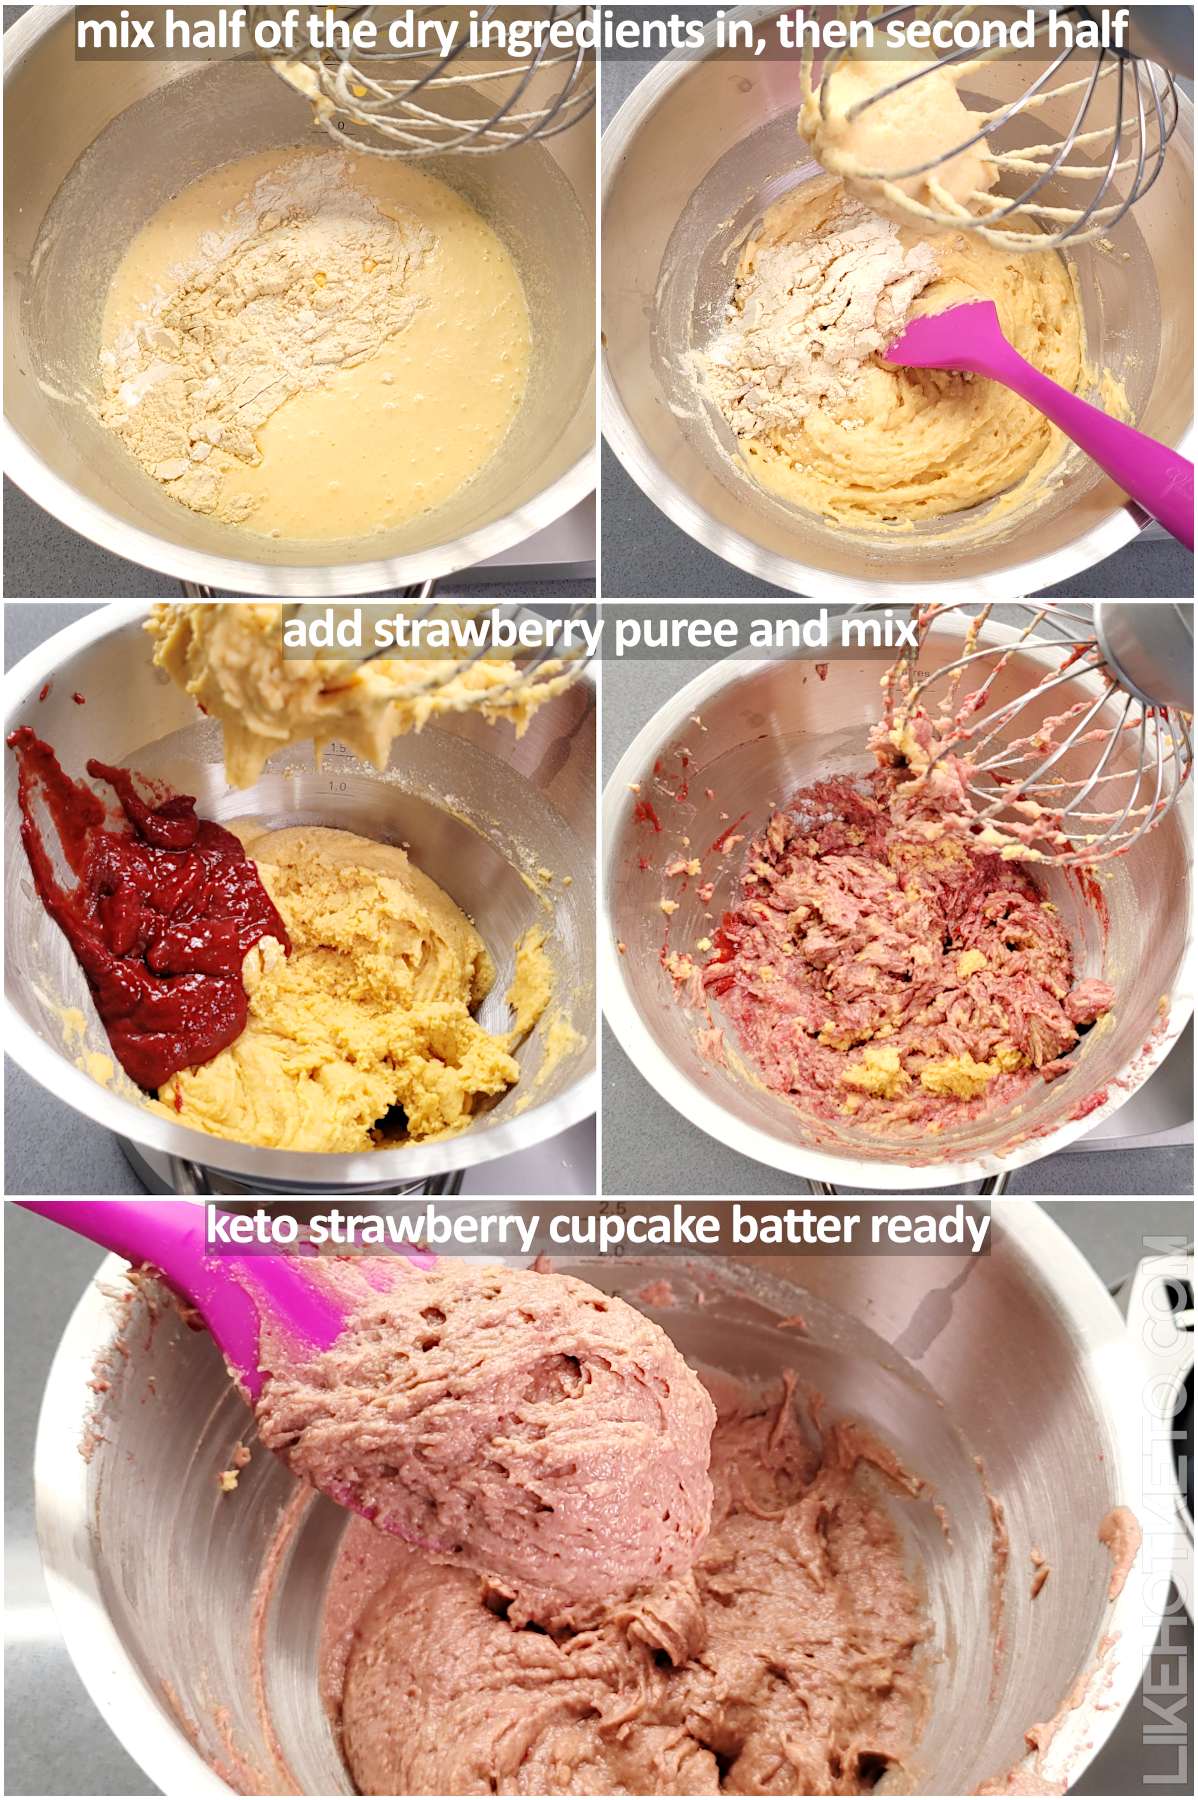 Mixing the keto strawberry cupcake batter.